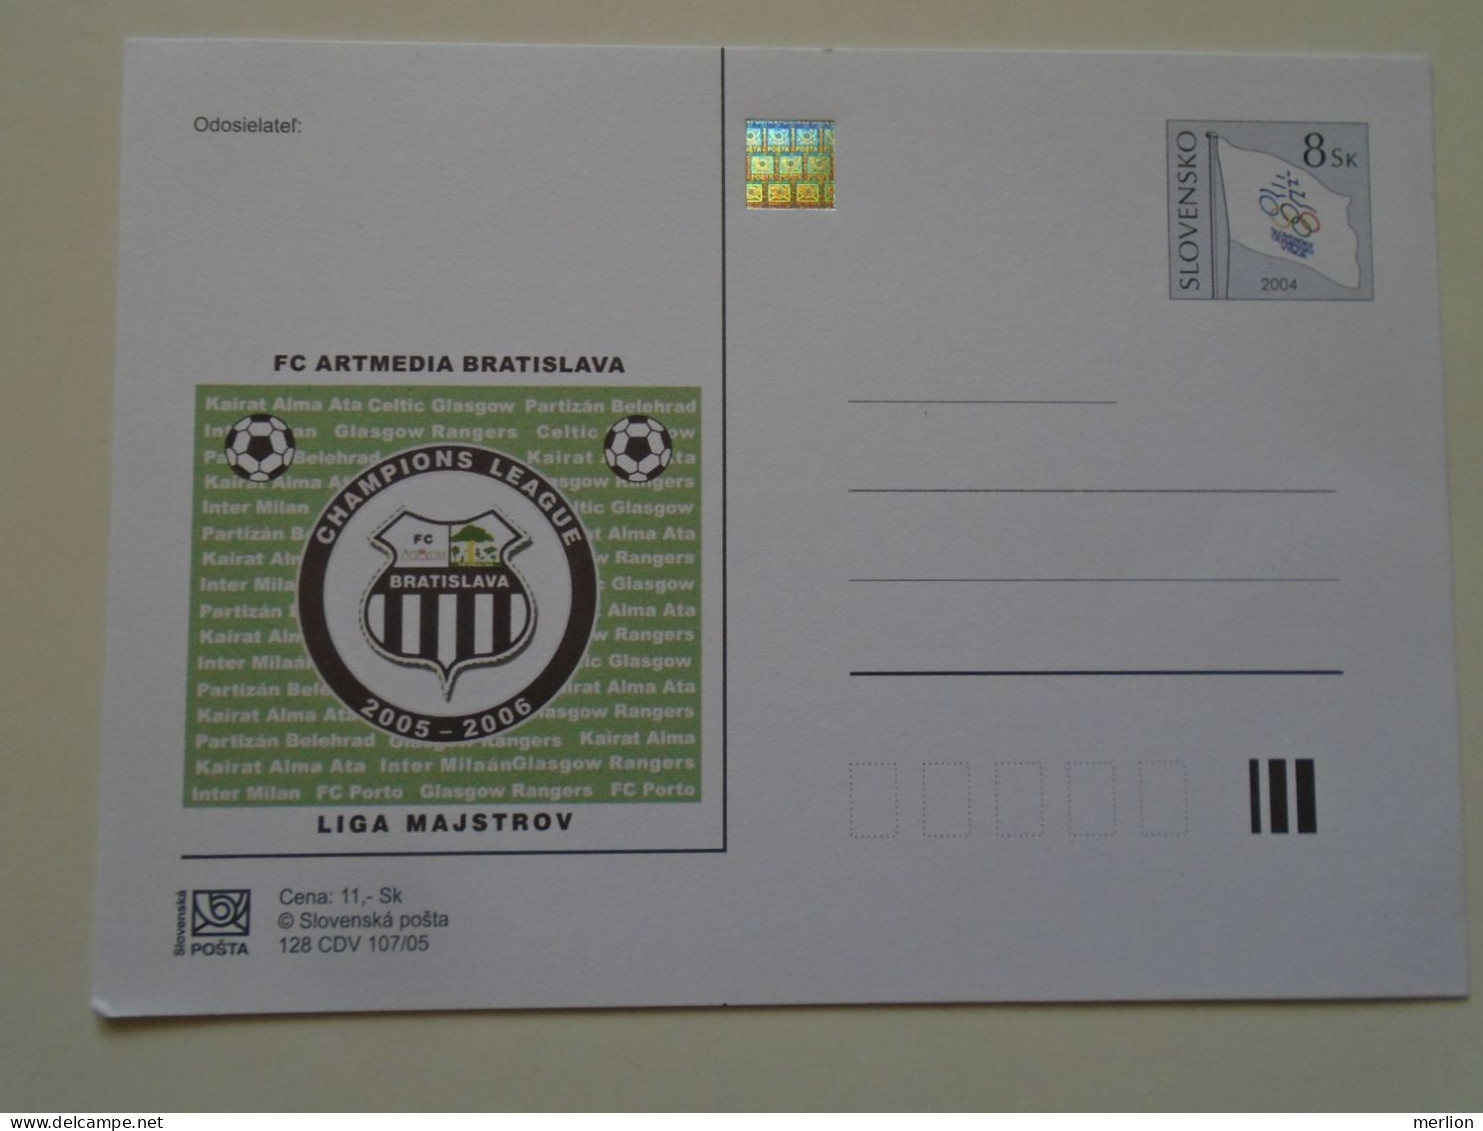 D196984    Slovensko   Slovakia   Bratislava 2004  Postal Stationery  FC Artmedia Bratislava - Champions League - Postcards